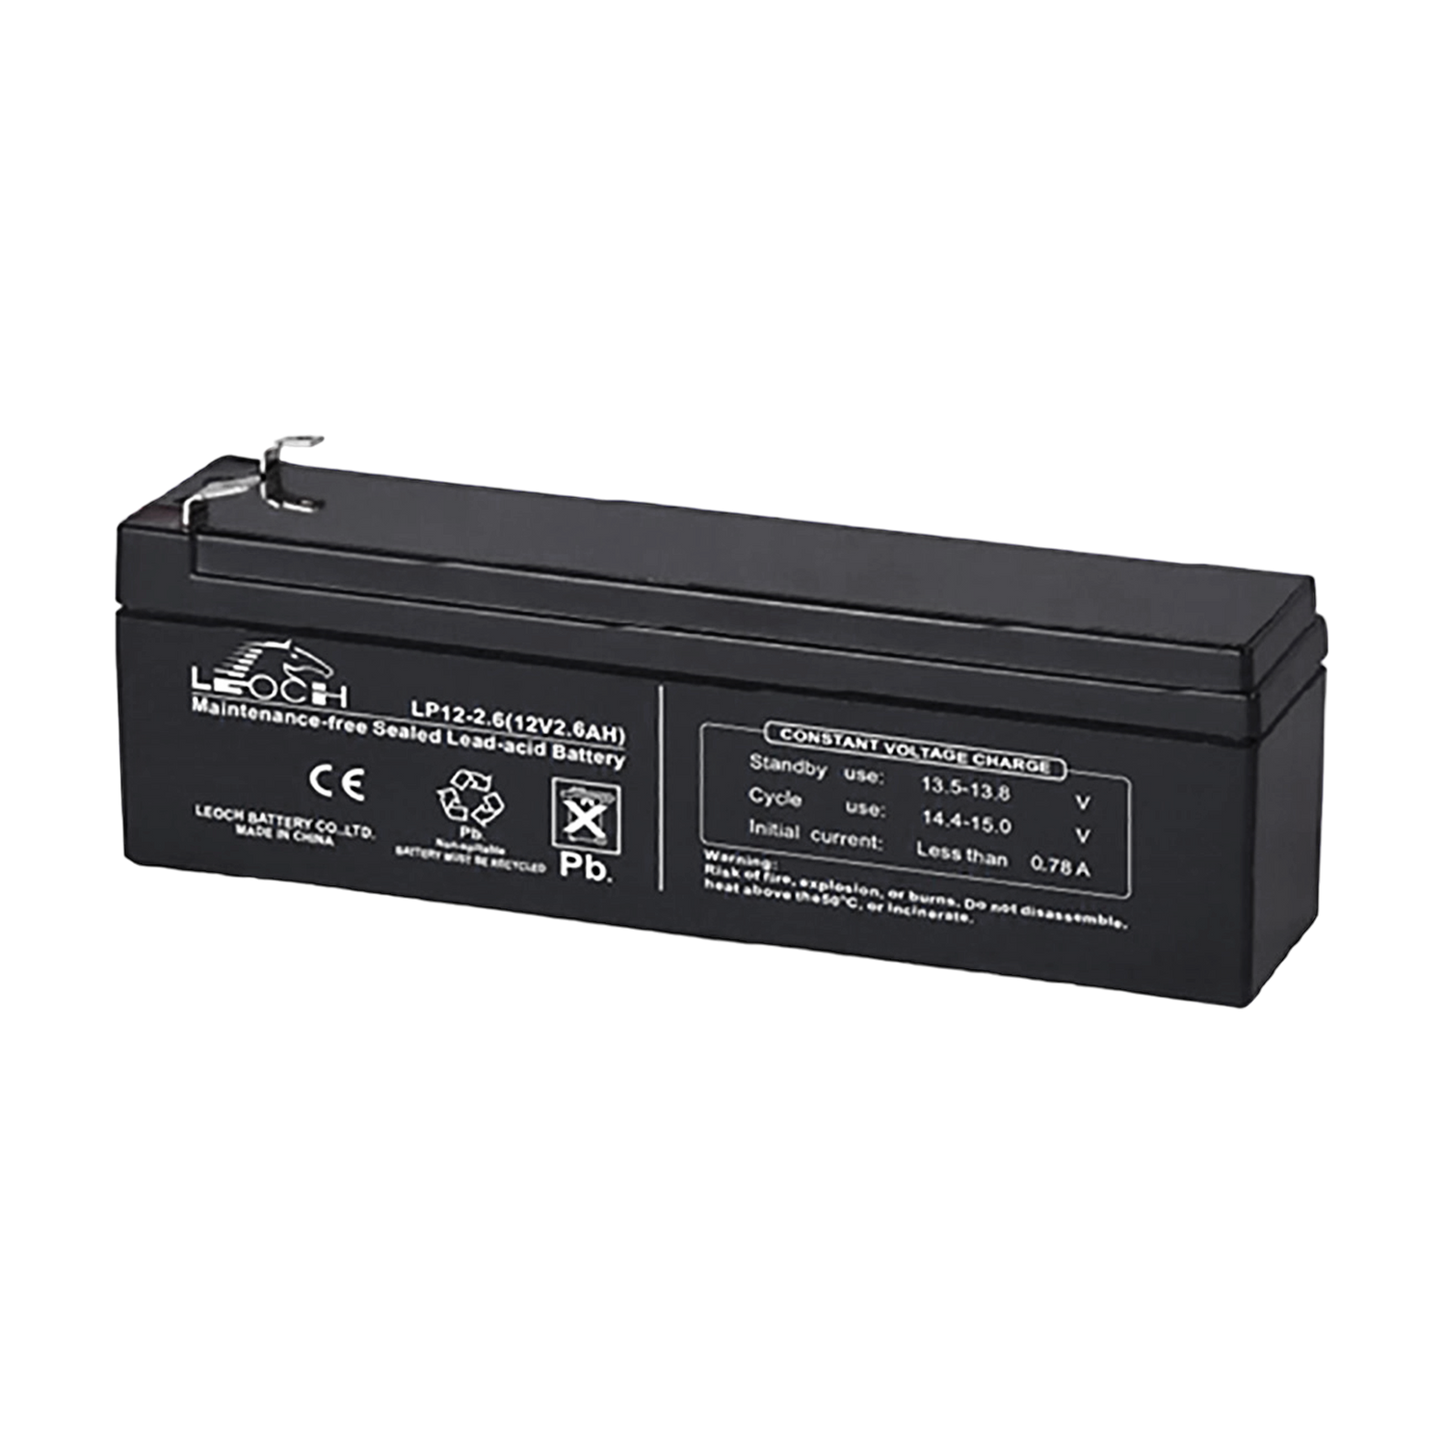 Liko, Inc. Likorall 200 12.0V 2.6Ah Battery (REQUIRES 2)